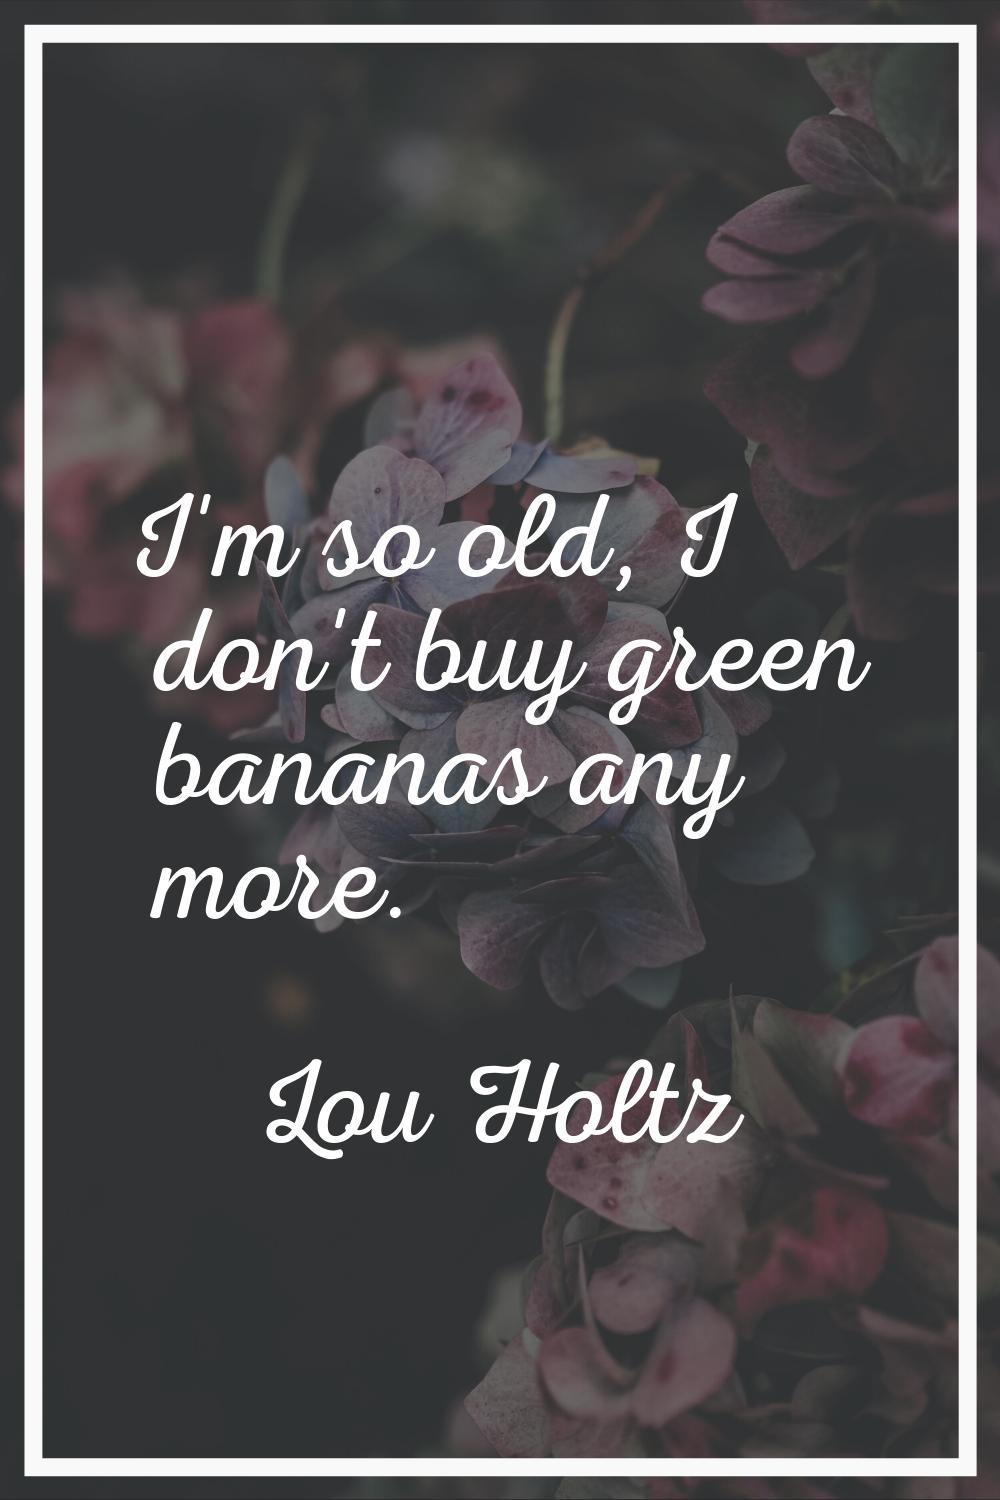 I'm so old, I don't buy green bananas any more.